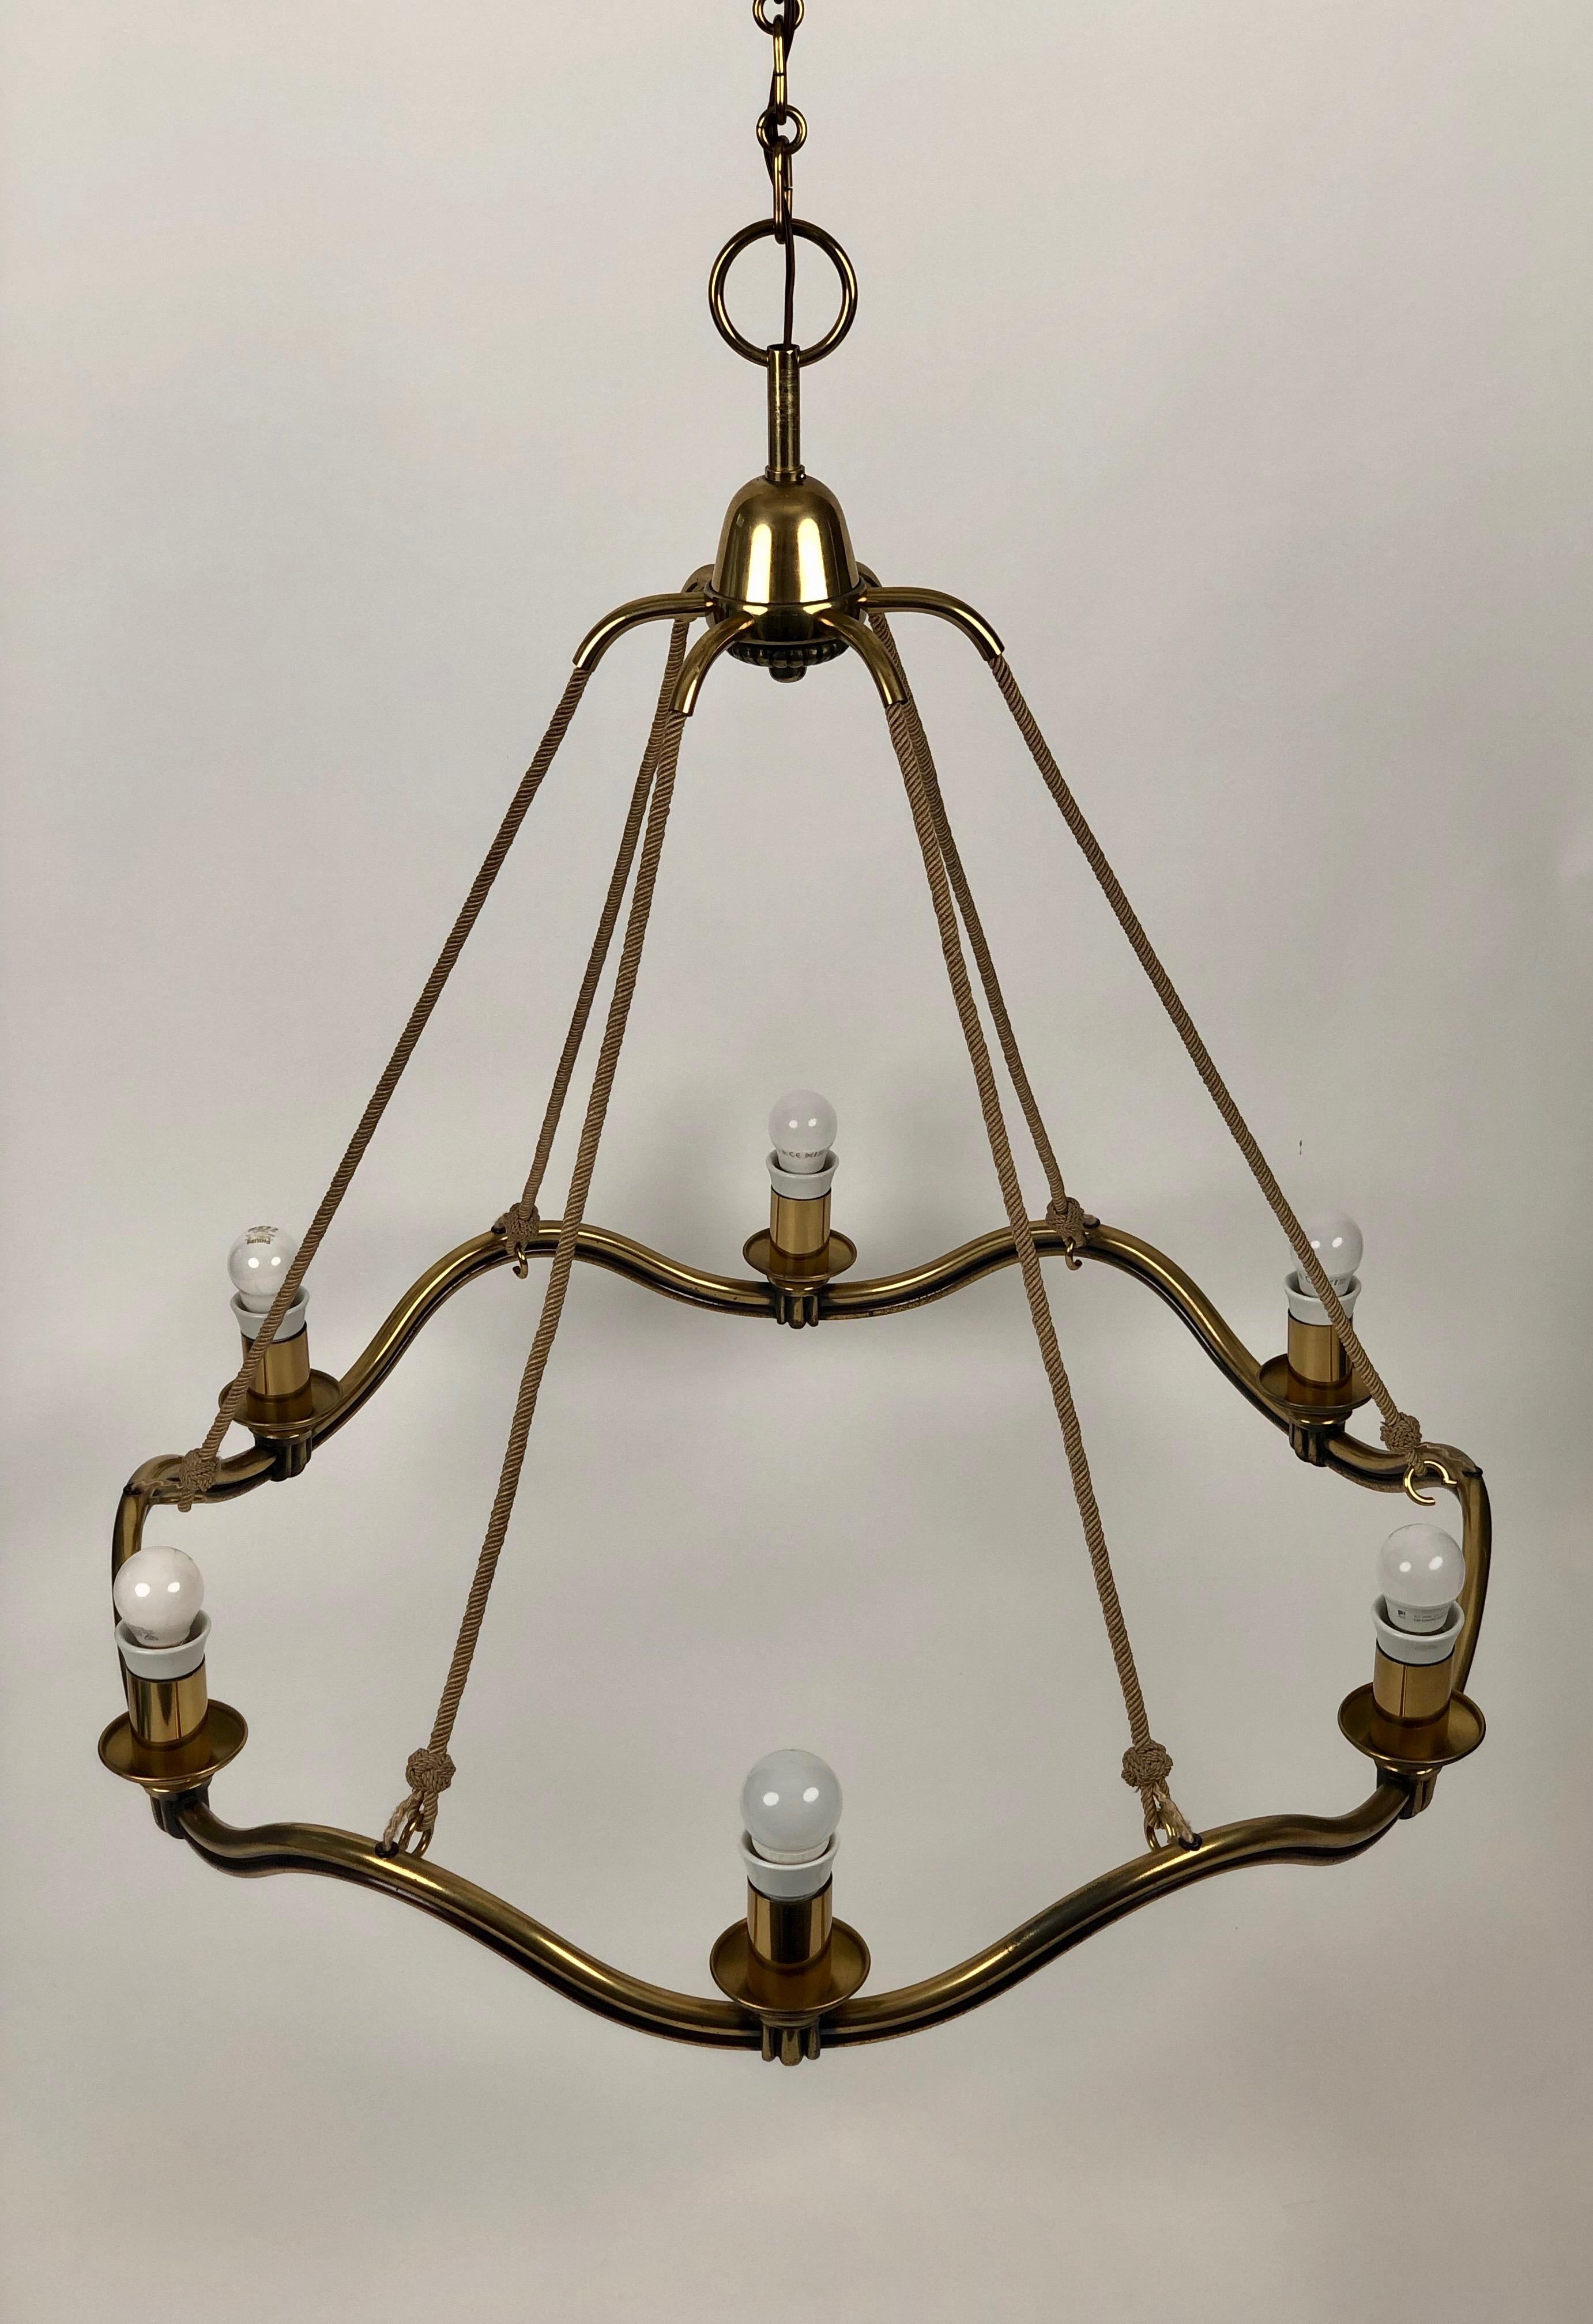 Brass Wave Lamp from Early Modernist Designer, Hugo Gorge, Austria